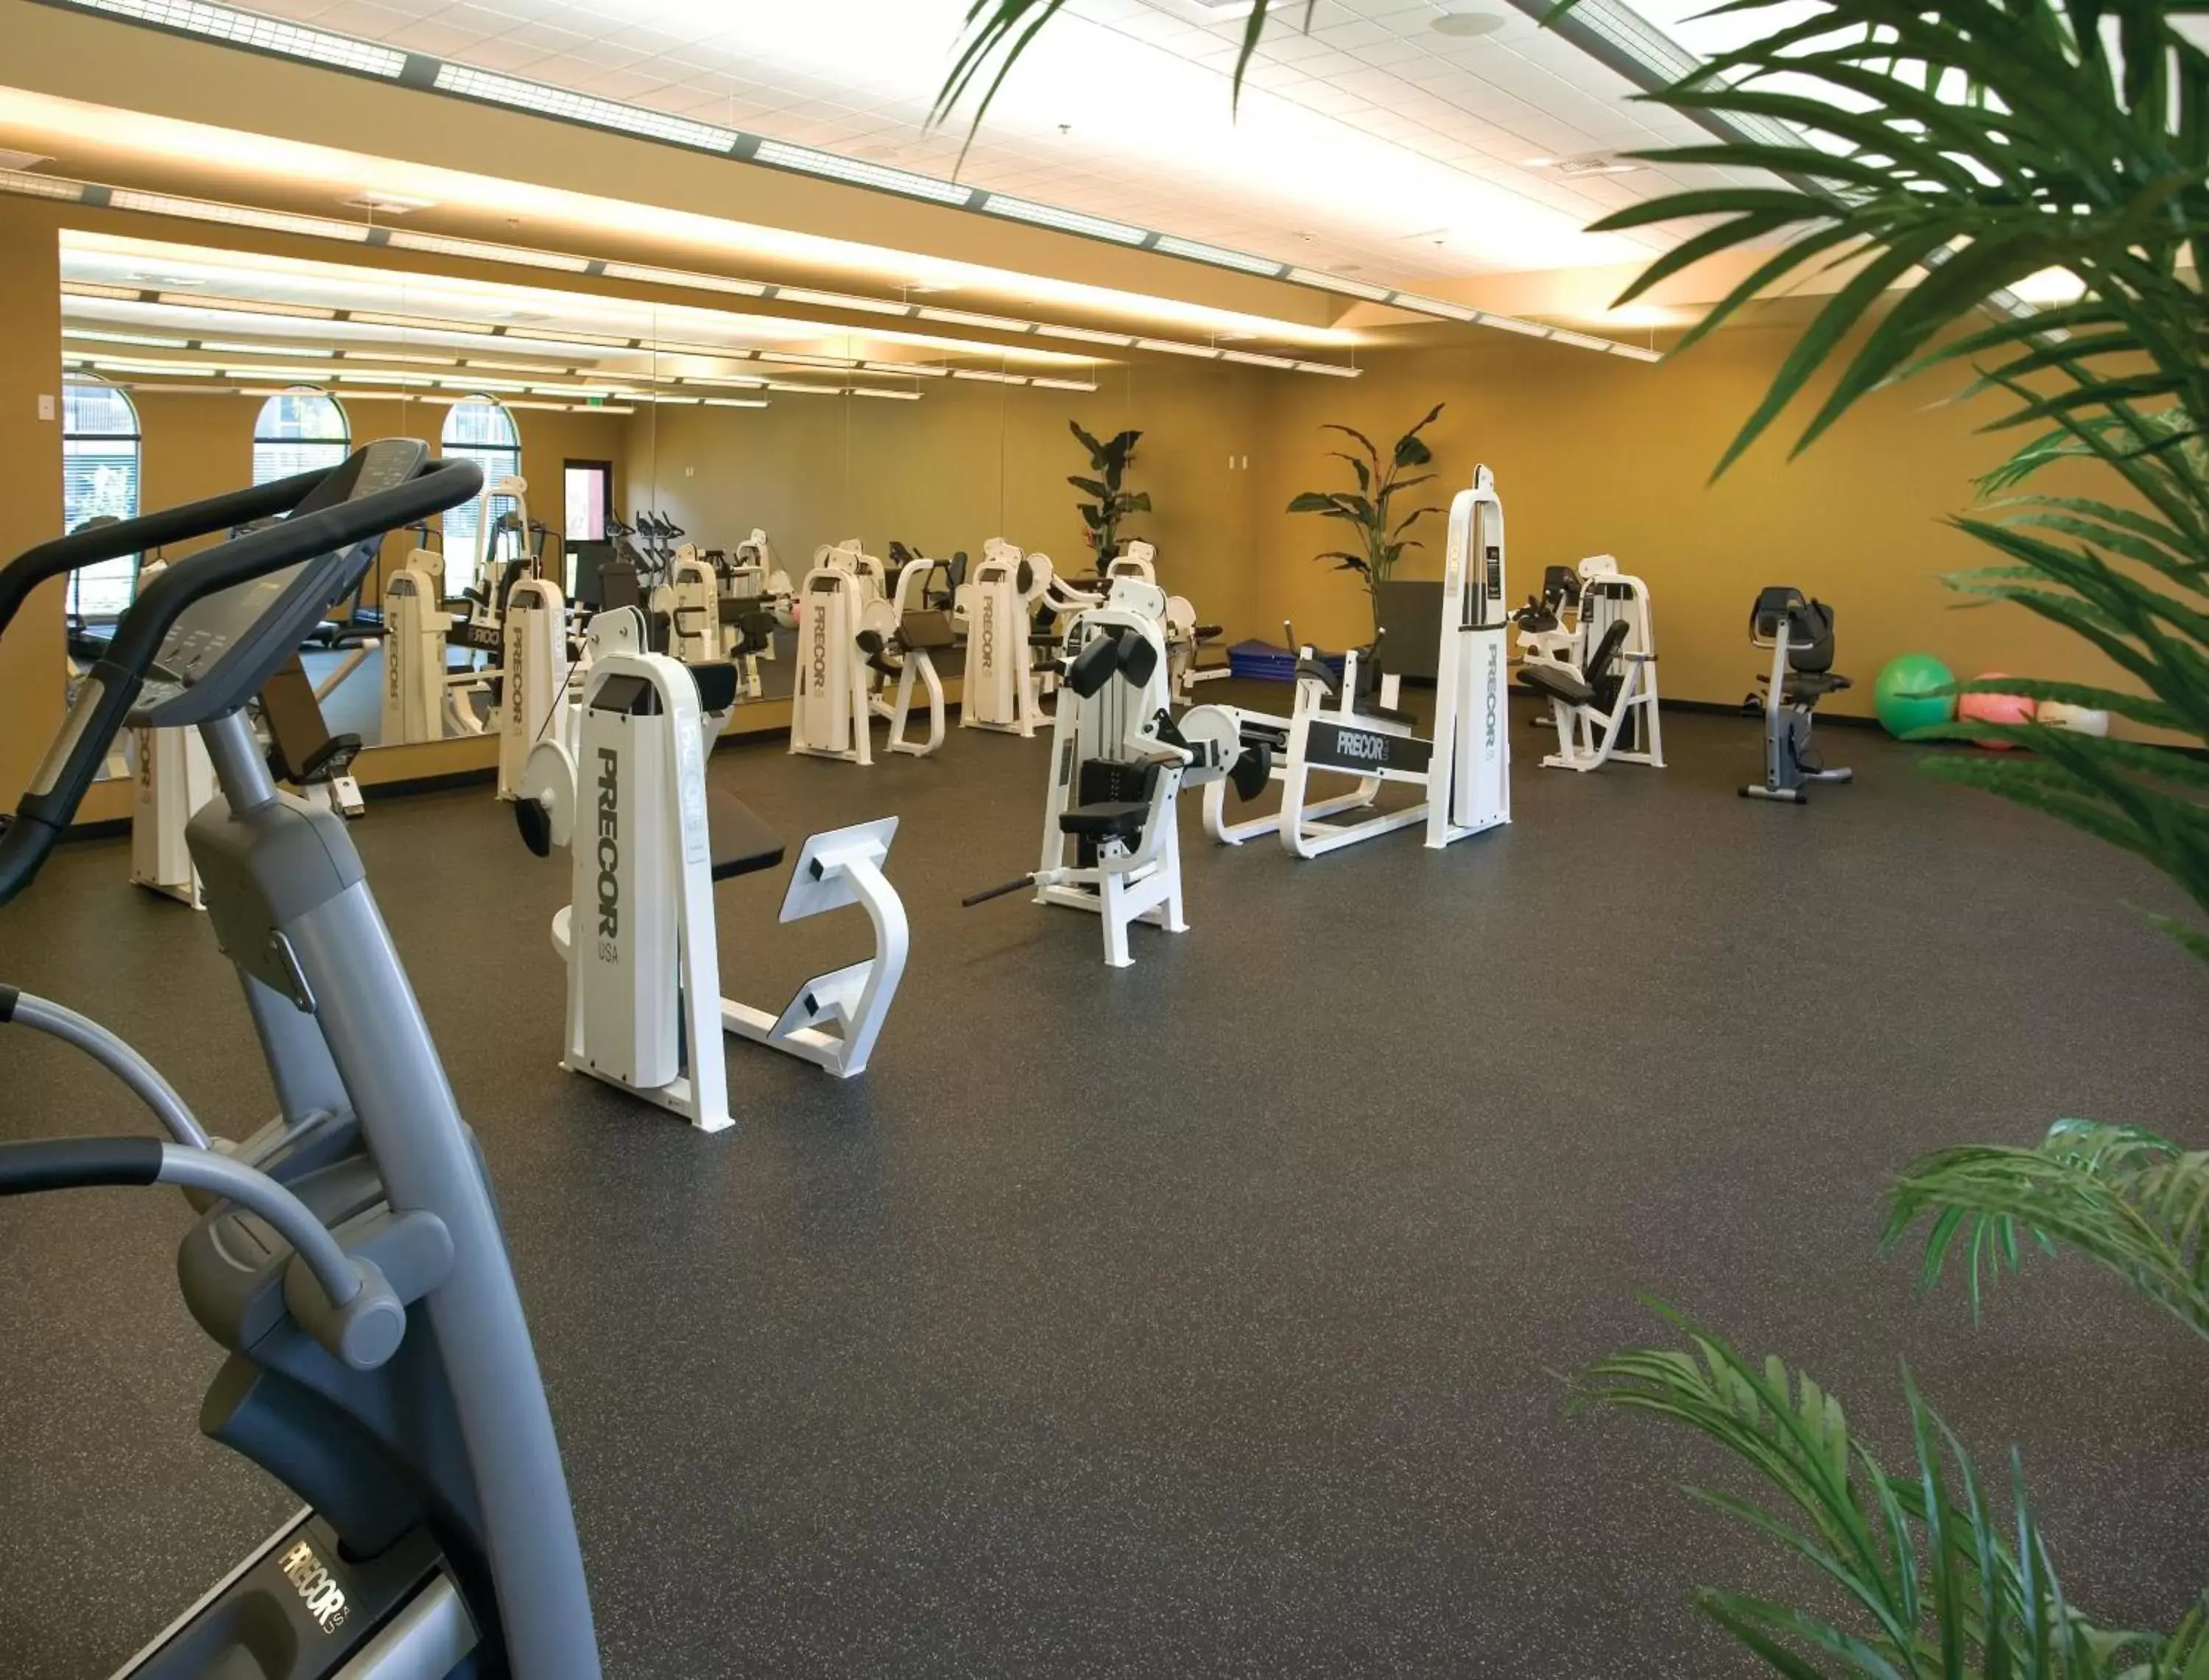 Fitness centre/facilities, Fitness Center/Facilities in WorldMark Indio